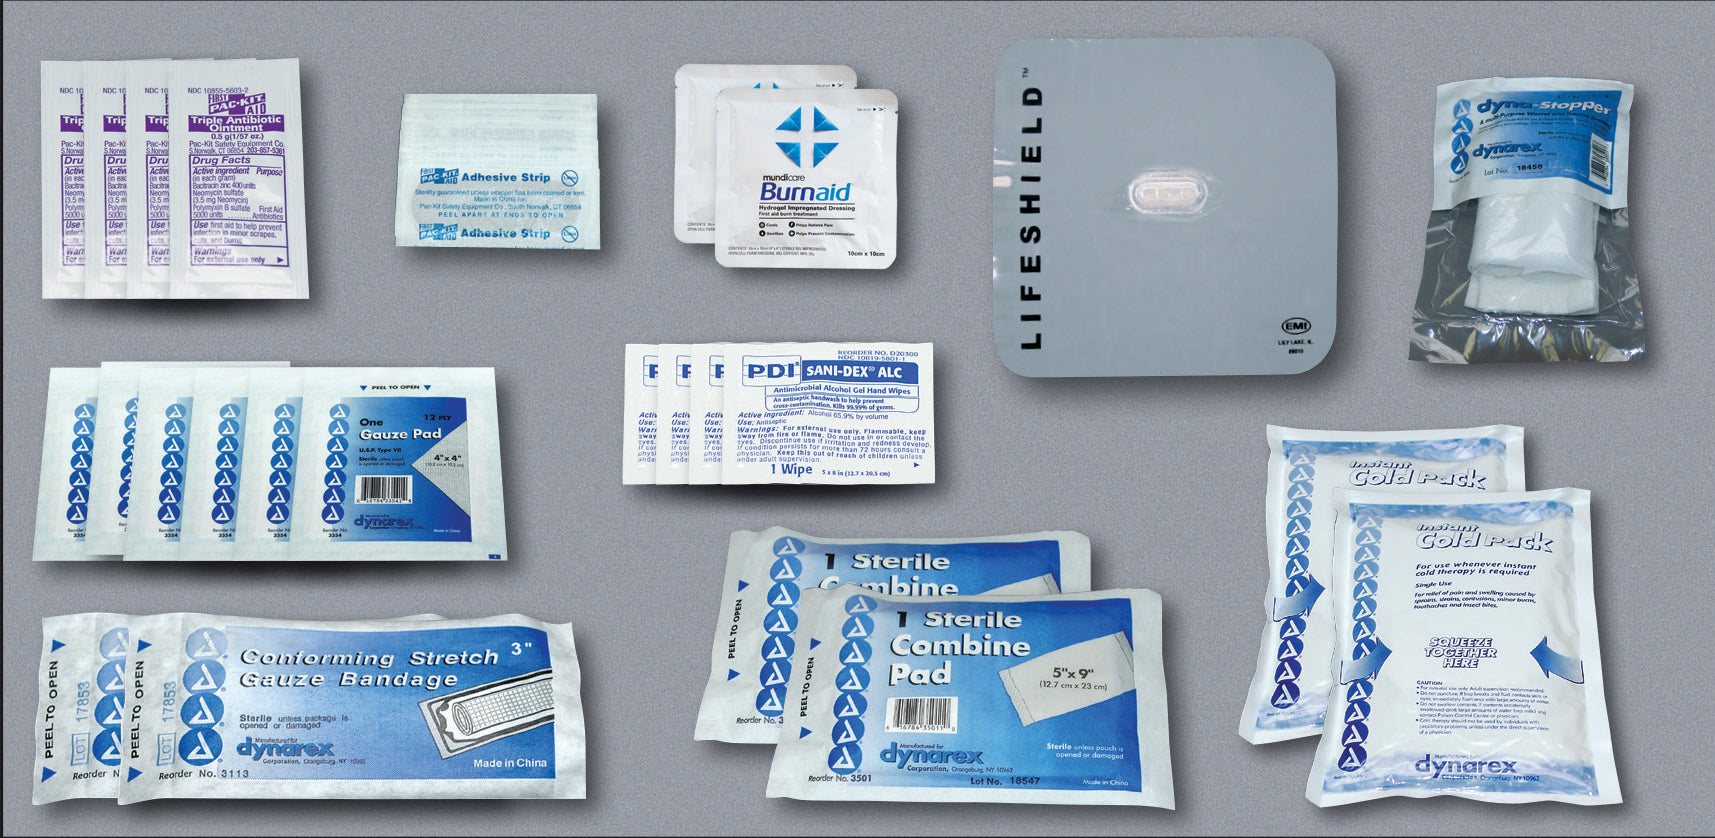 EMI Emergency Medical Search and Rescue Basic Response Kit - Full kit, Bag only, or Refill kit - Refill Kit